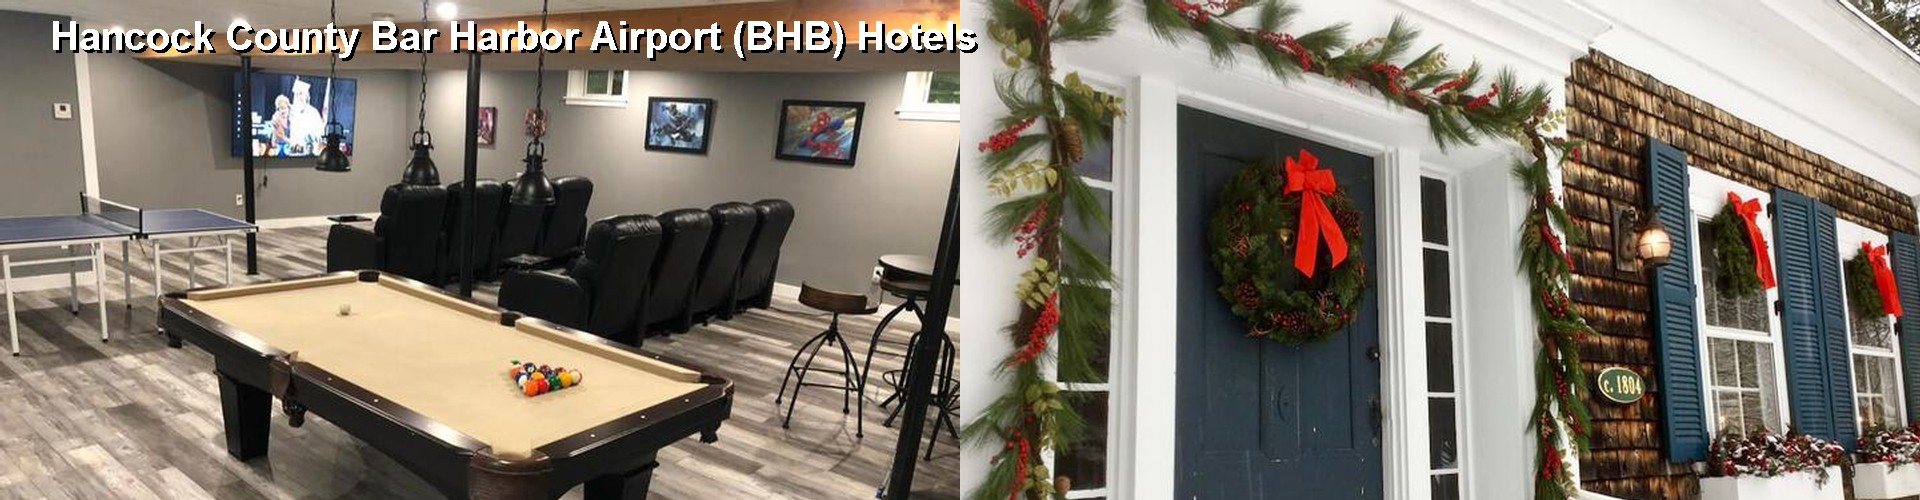 5 Best Hotels near Hancock County Bar Harbor Airport (BHB)